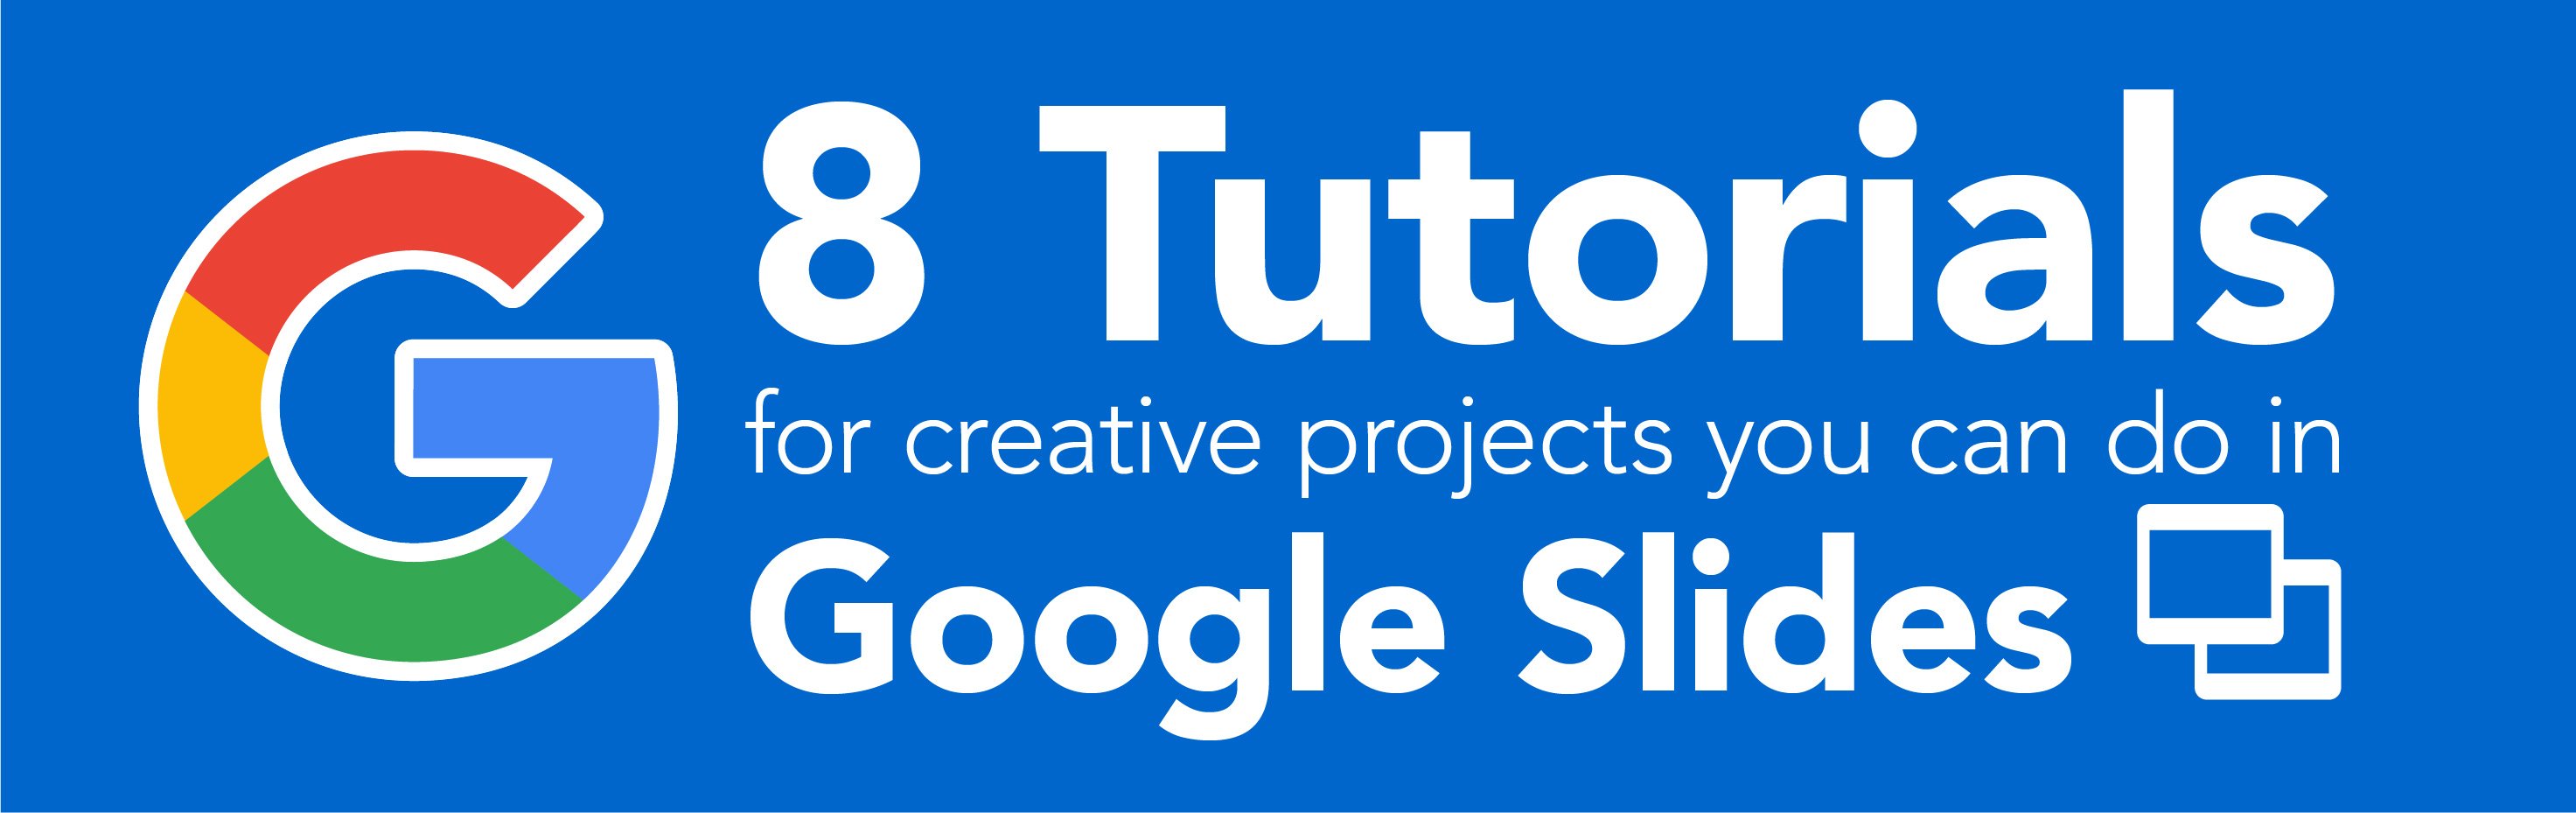 tutorials-google-slides-blog-header